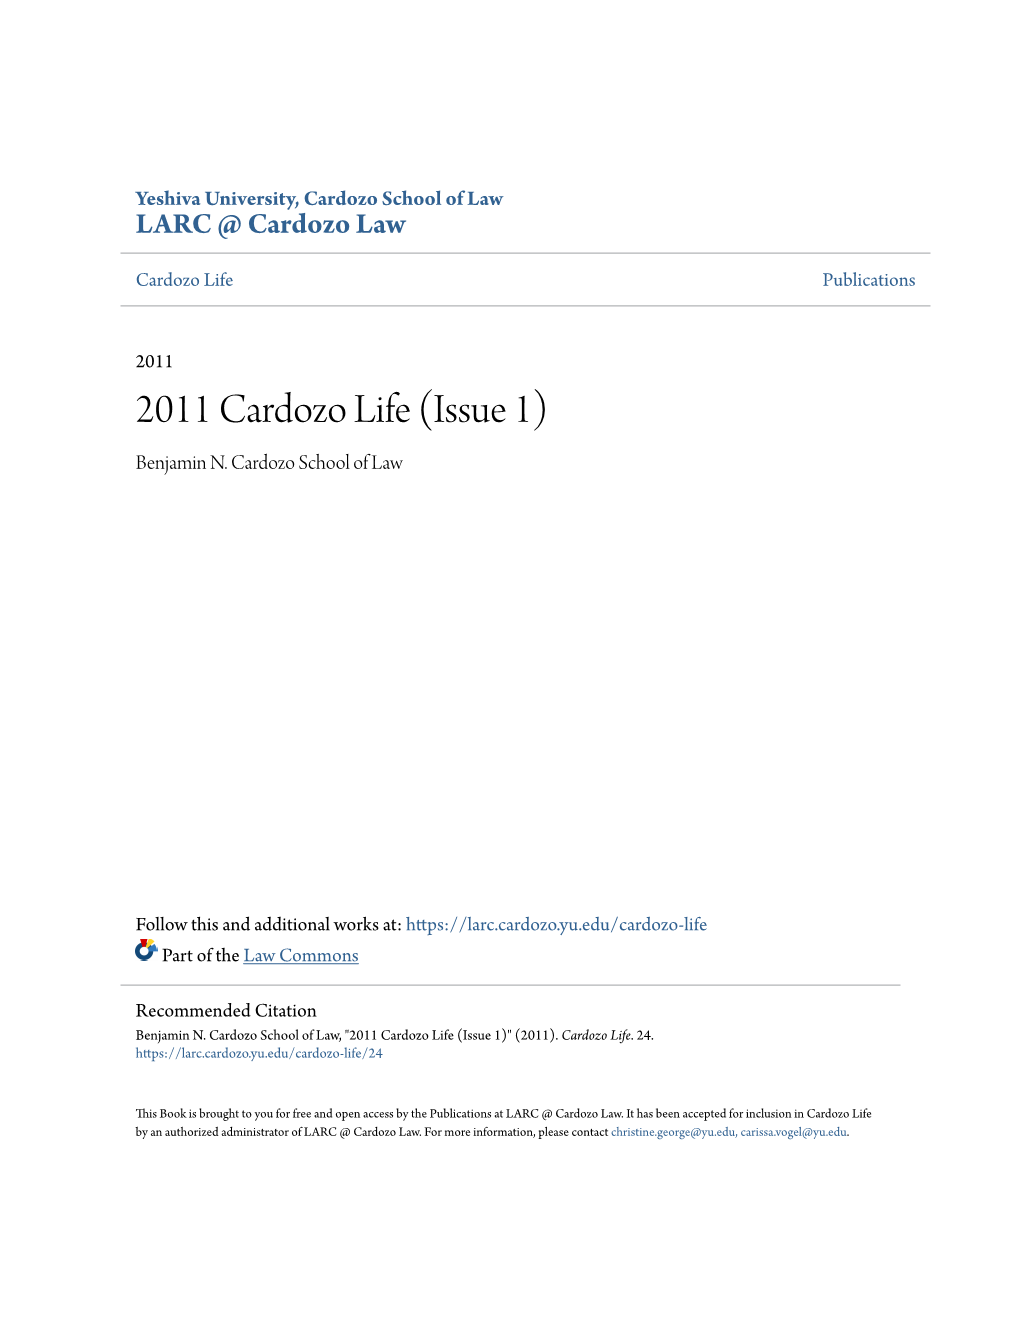 2011 Cardozo Life (Issue 1) Benjamin N